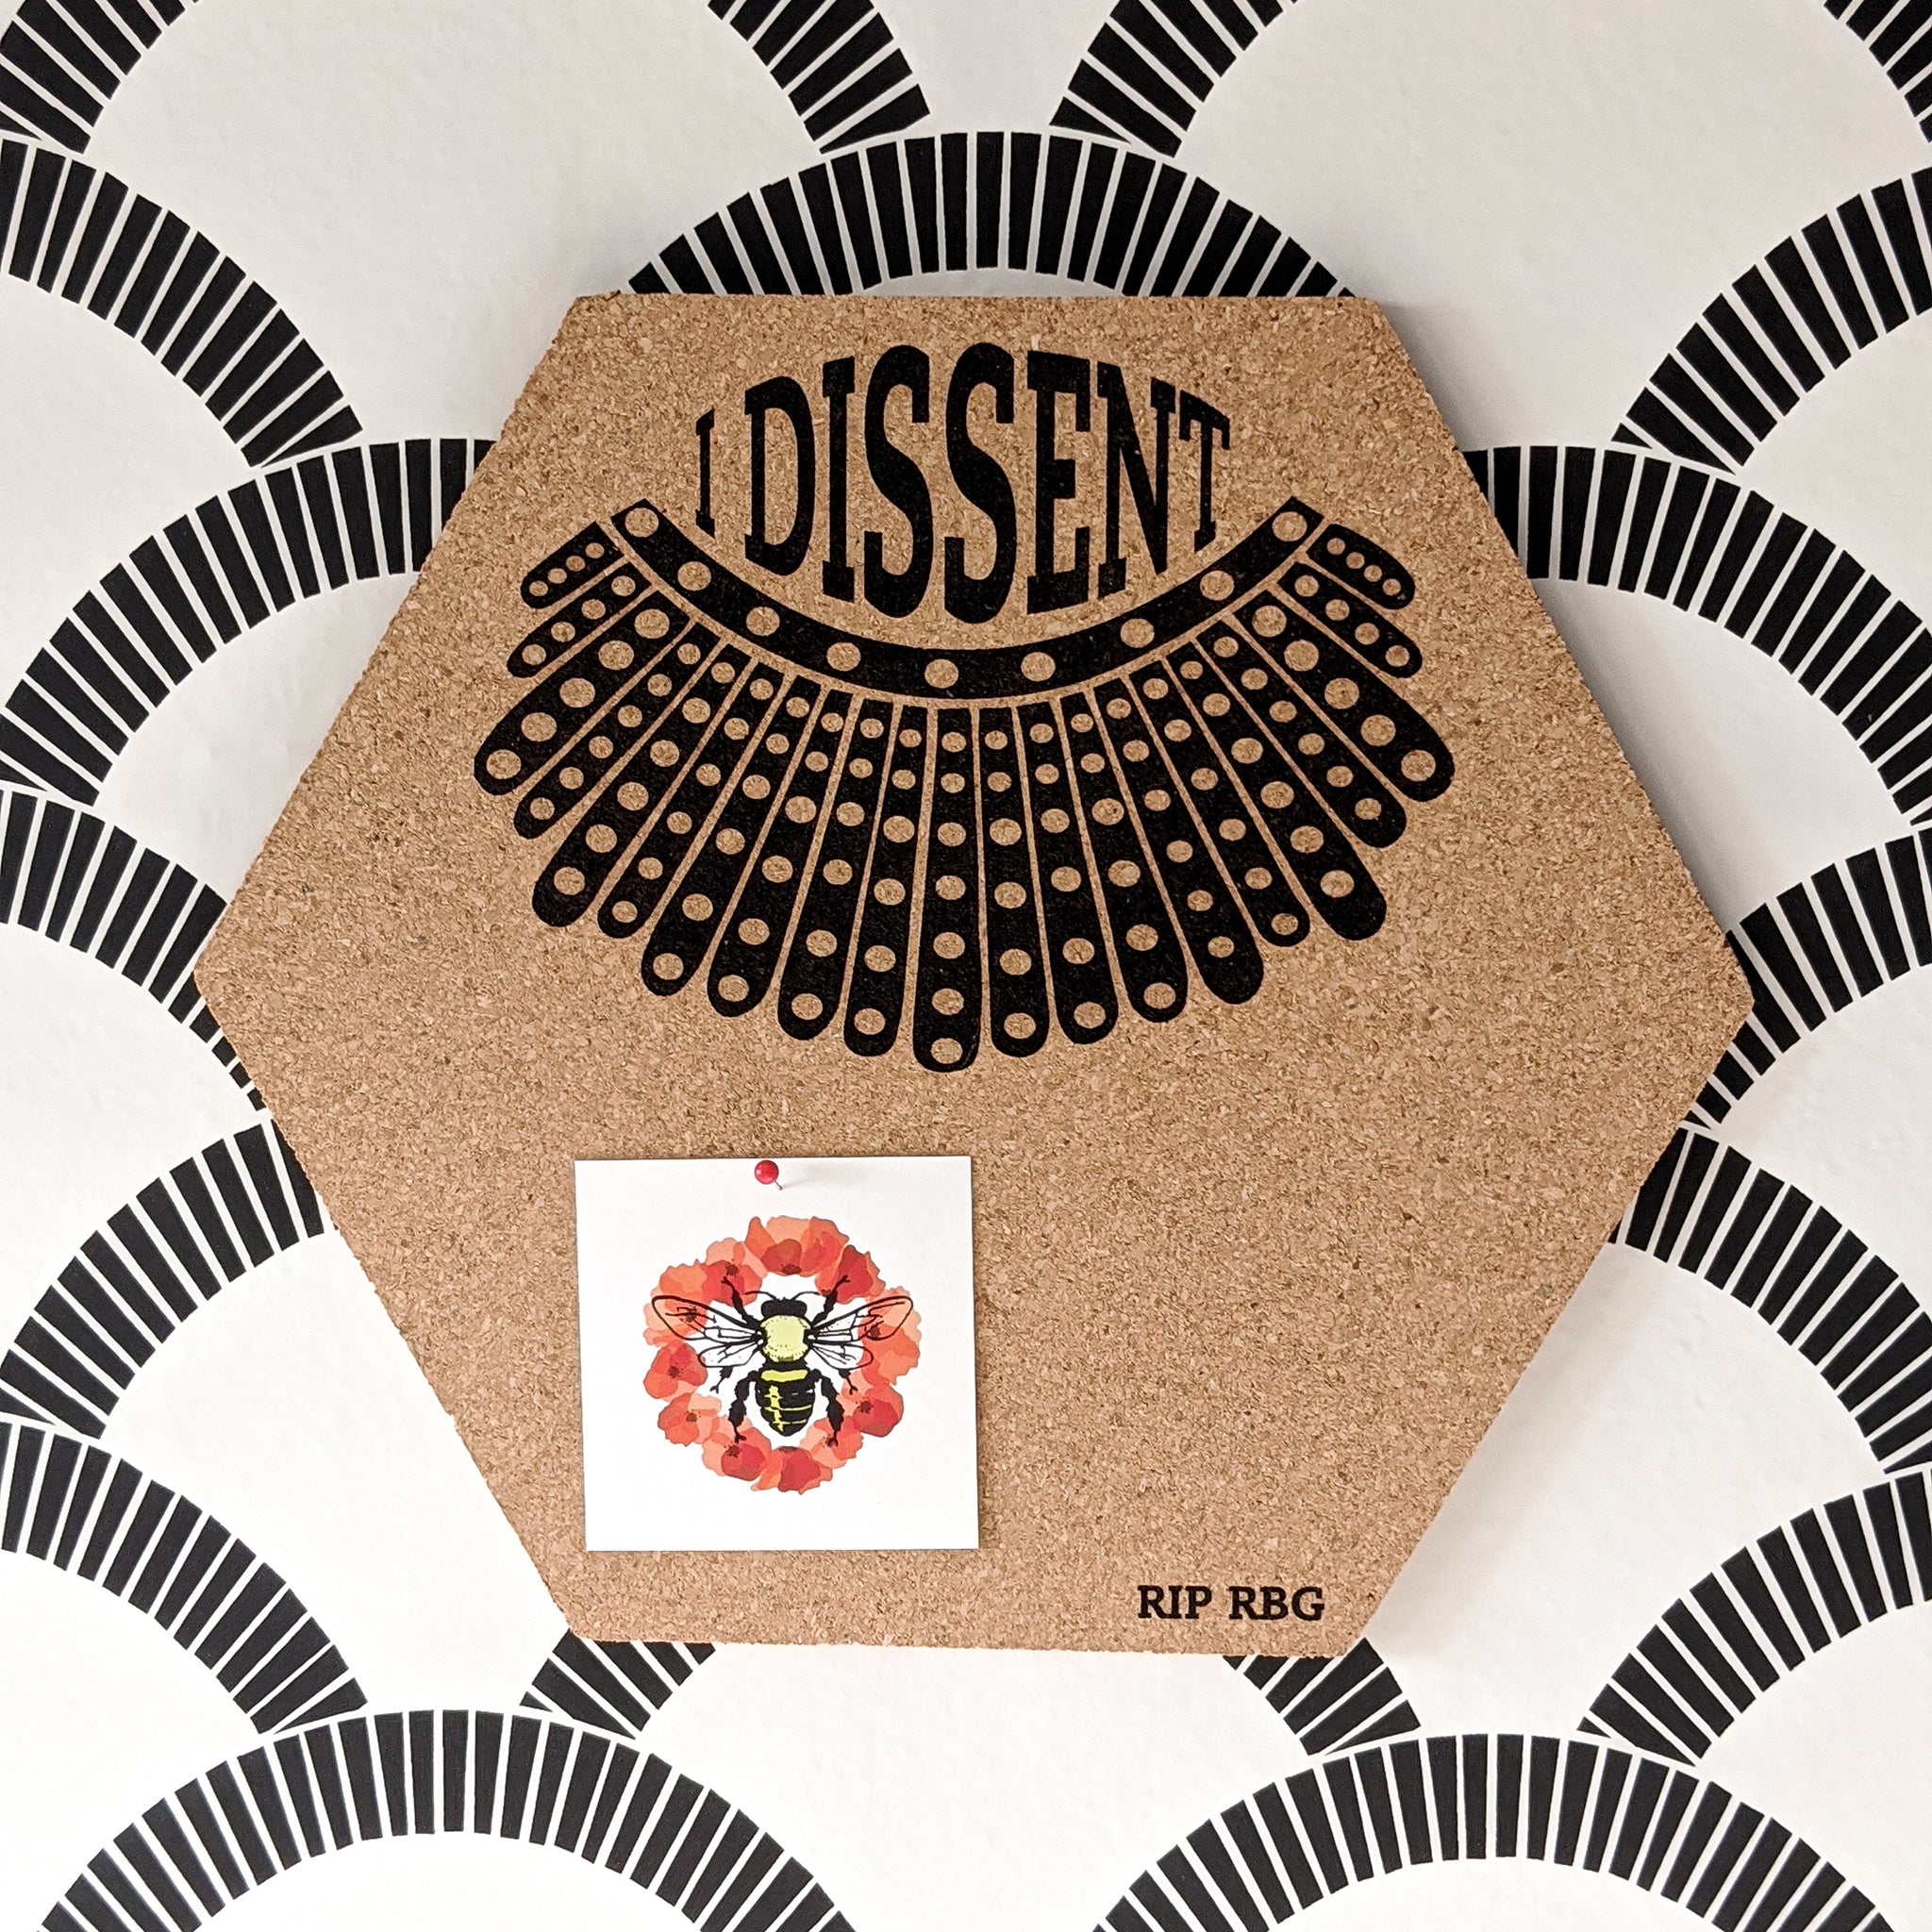 RBG Collar "I Dissent" Hexagon Cork Board